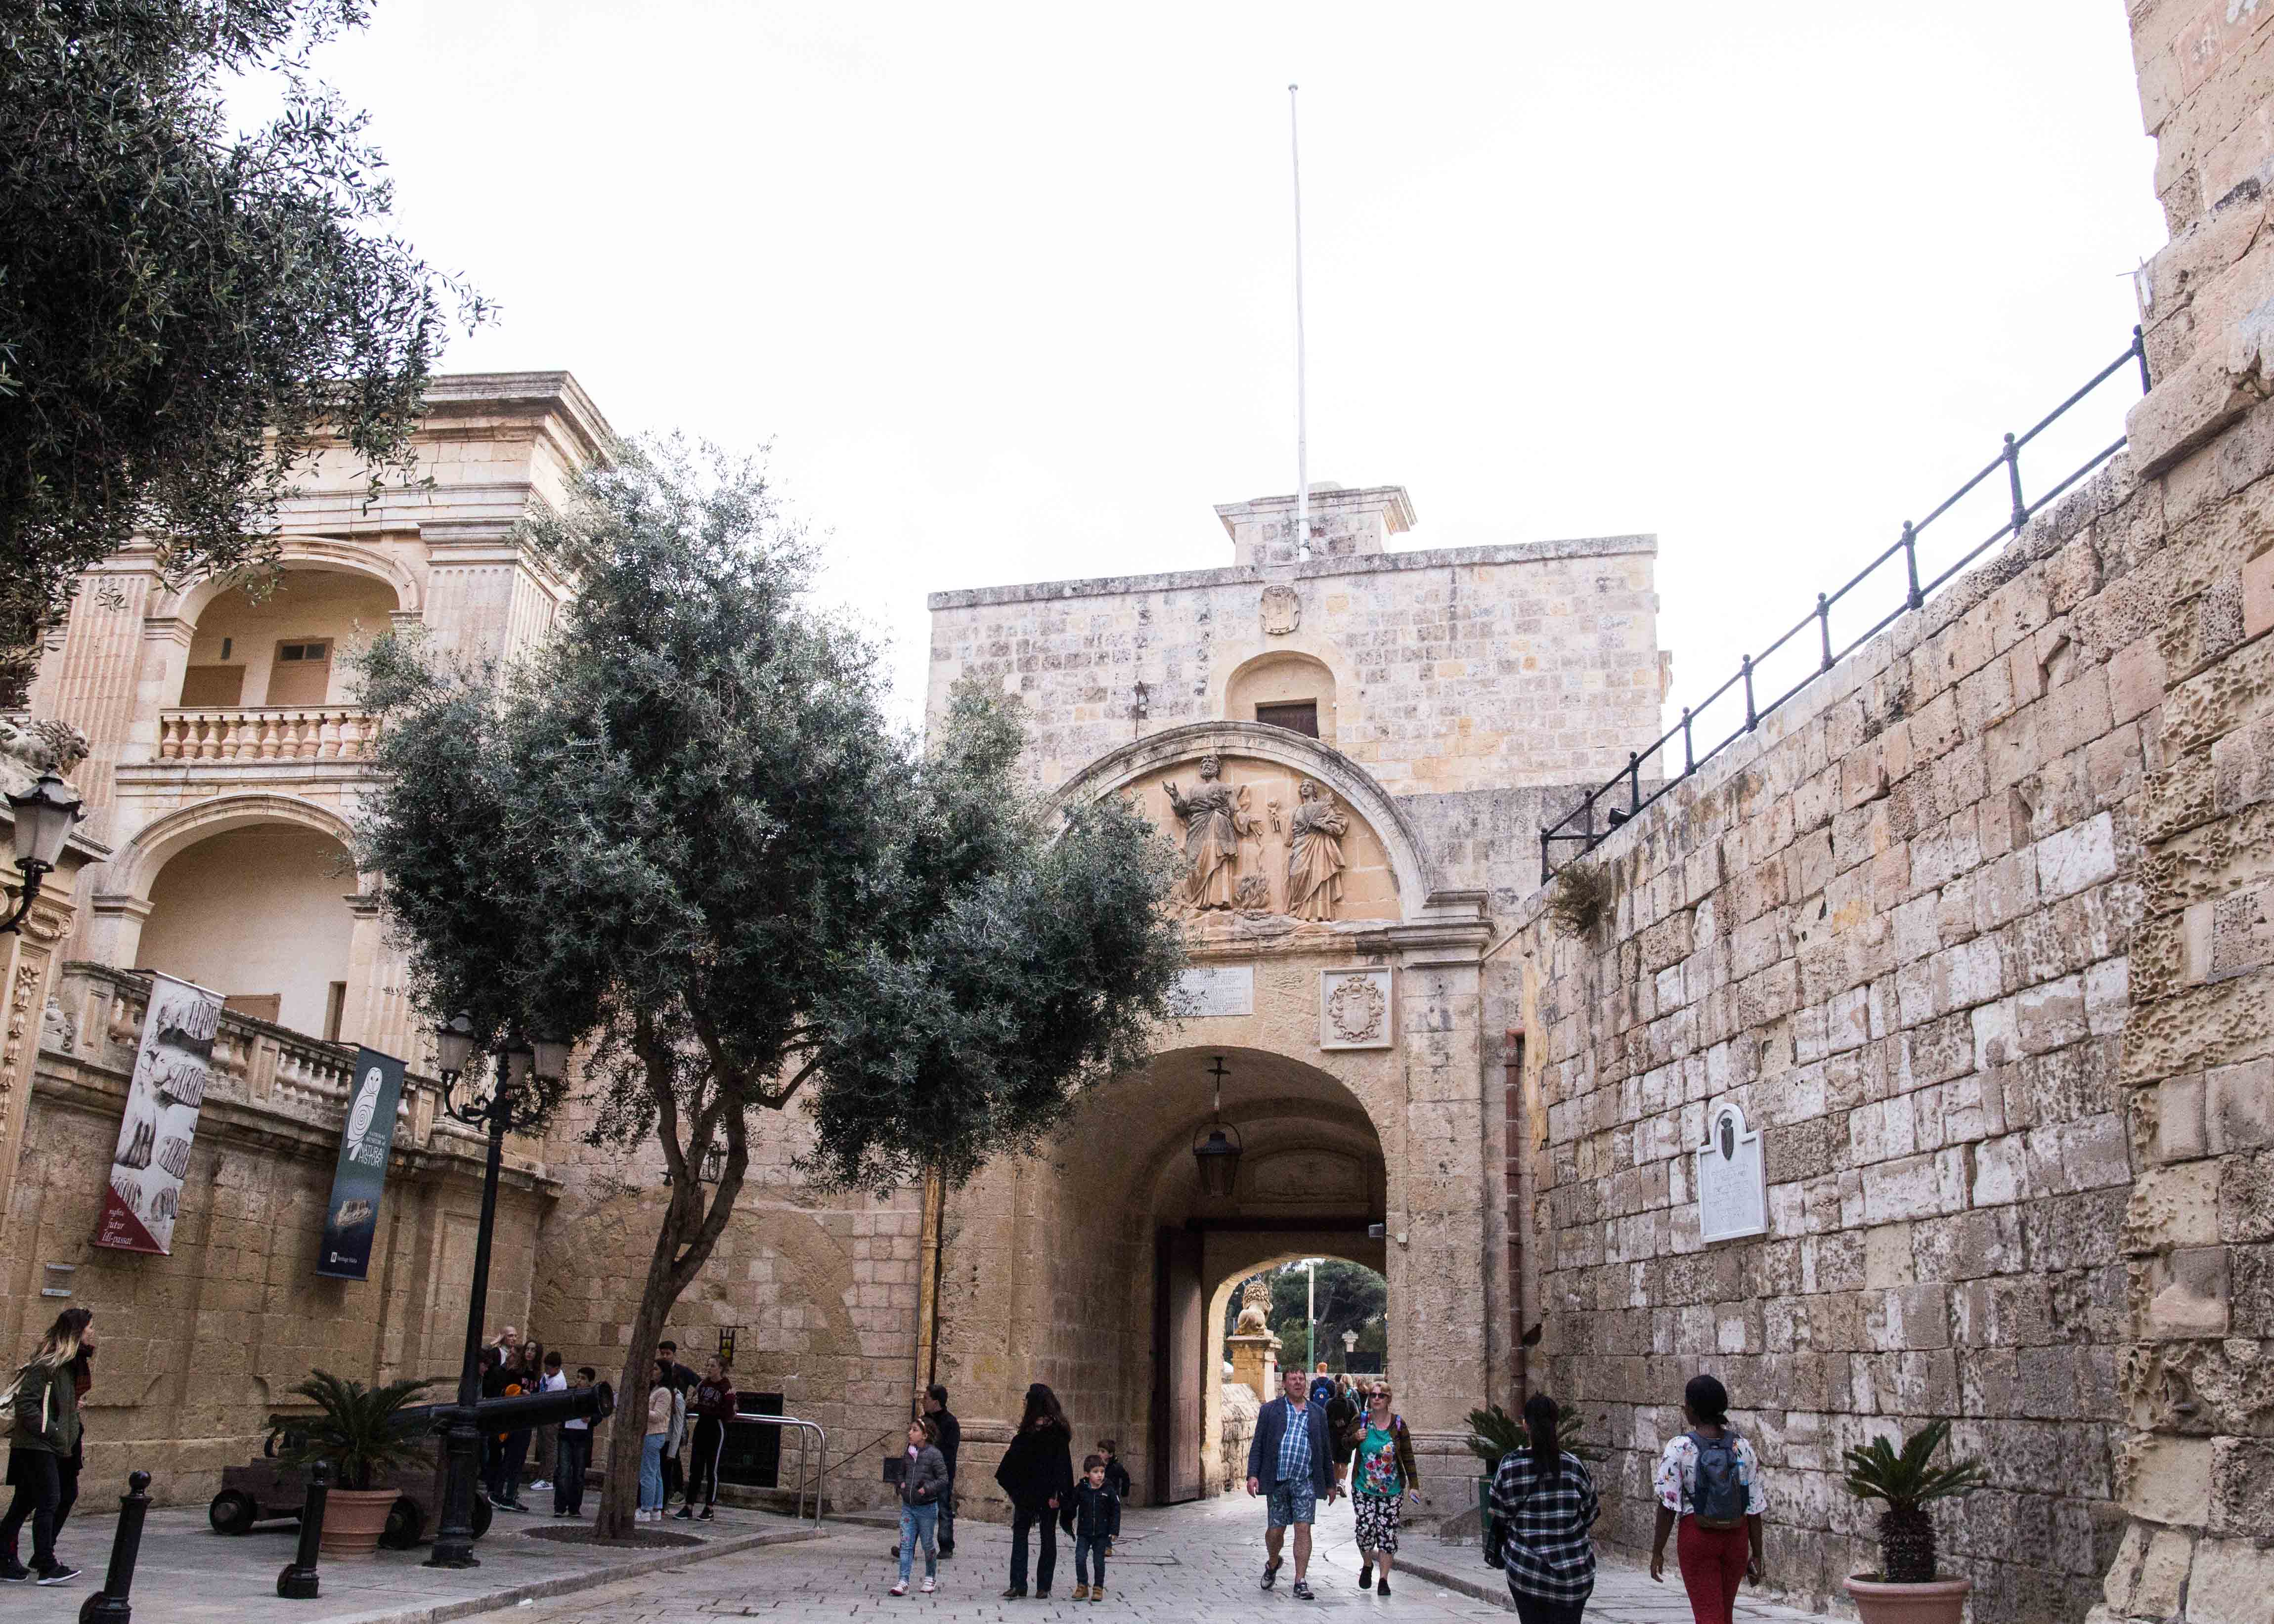 Mdina Gate, Where to visit in Malta?